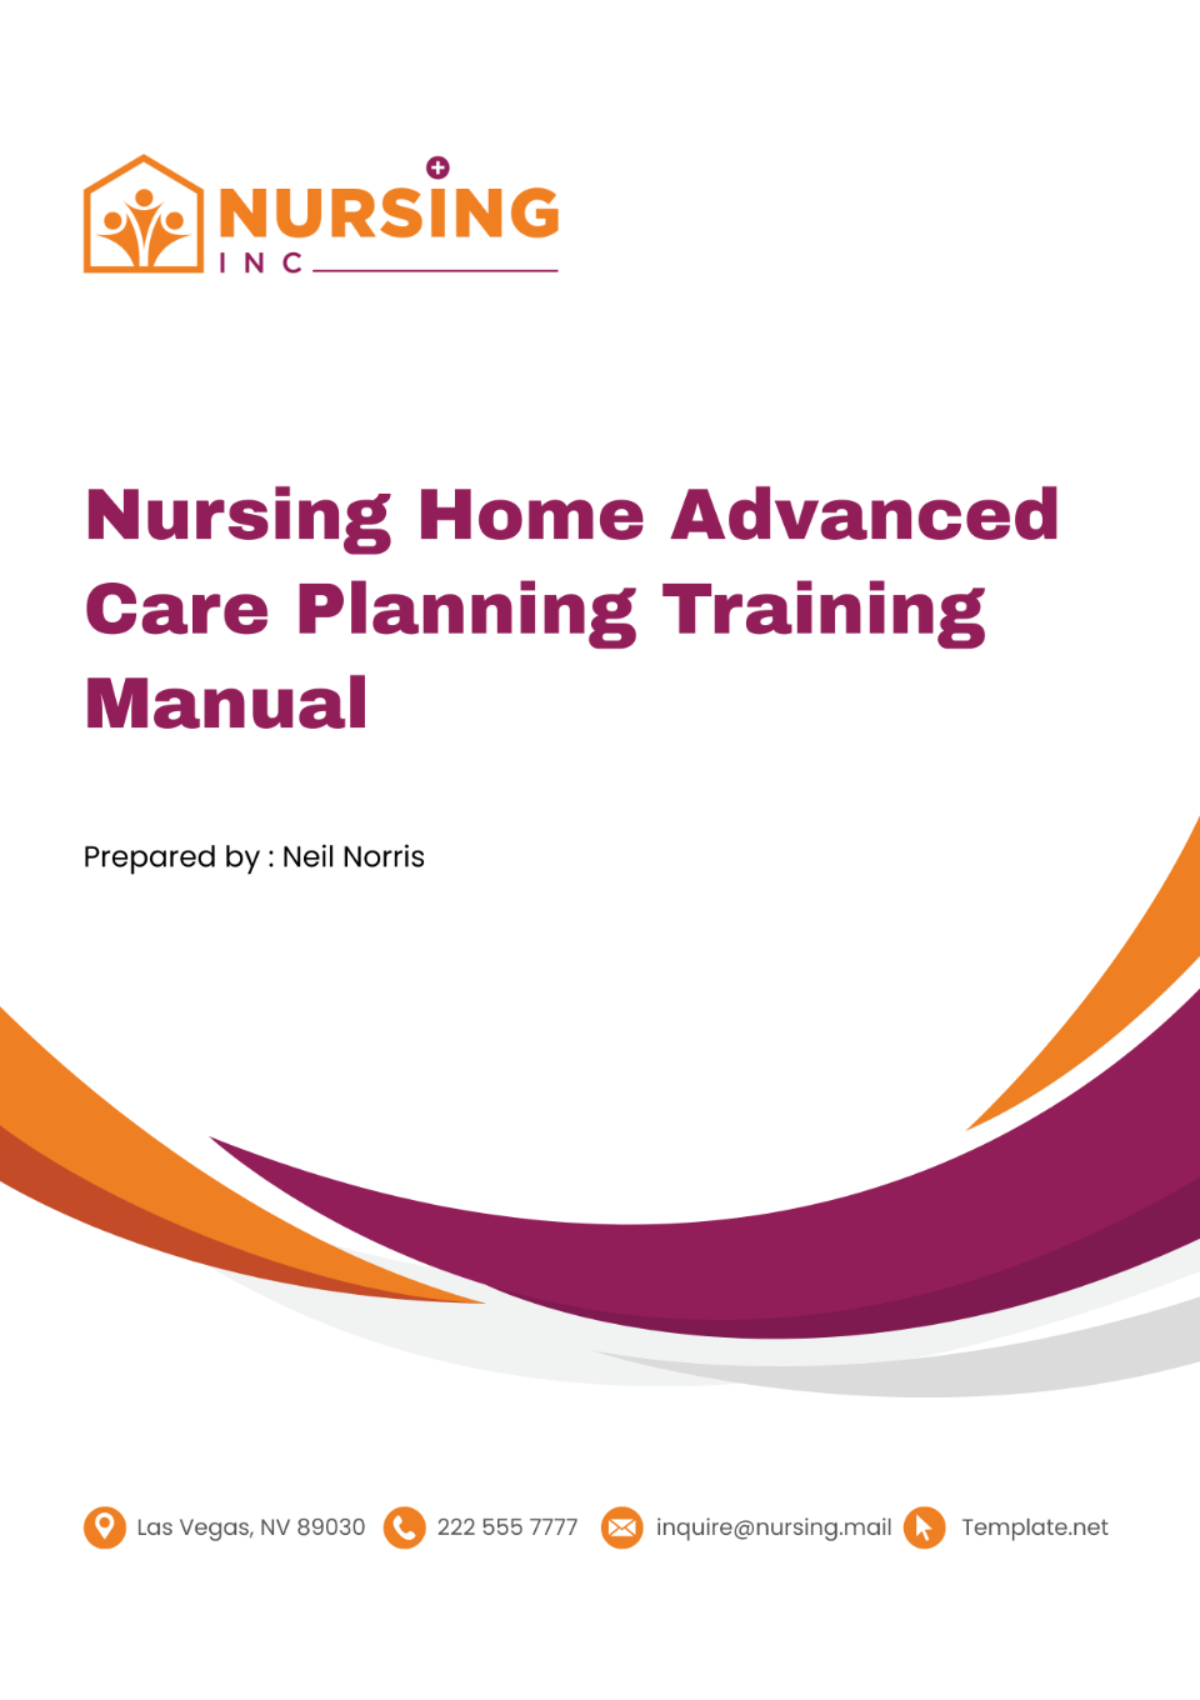 Nursing Home Advanced Care Planning Training Manual Template